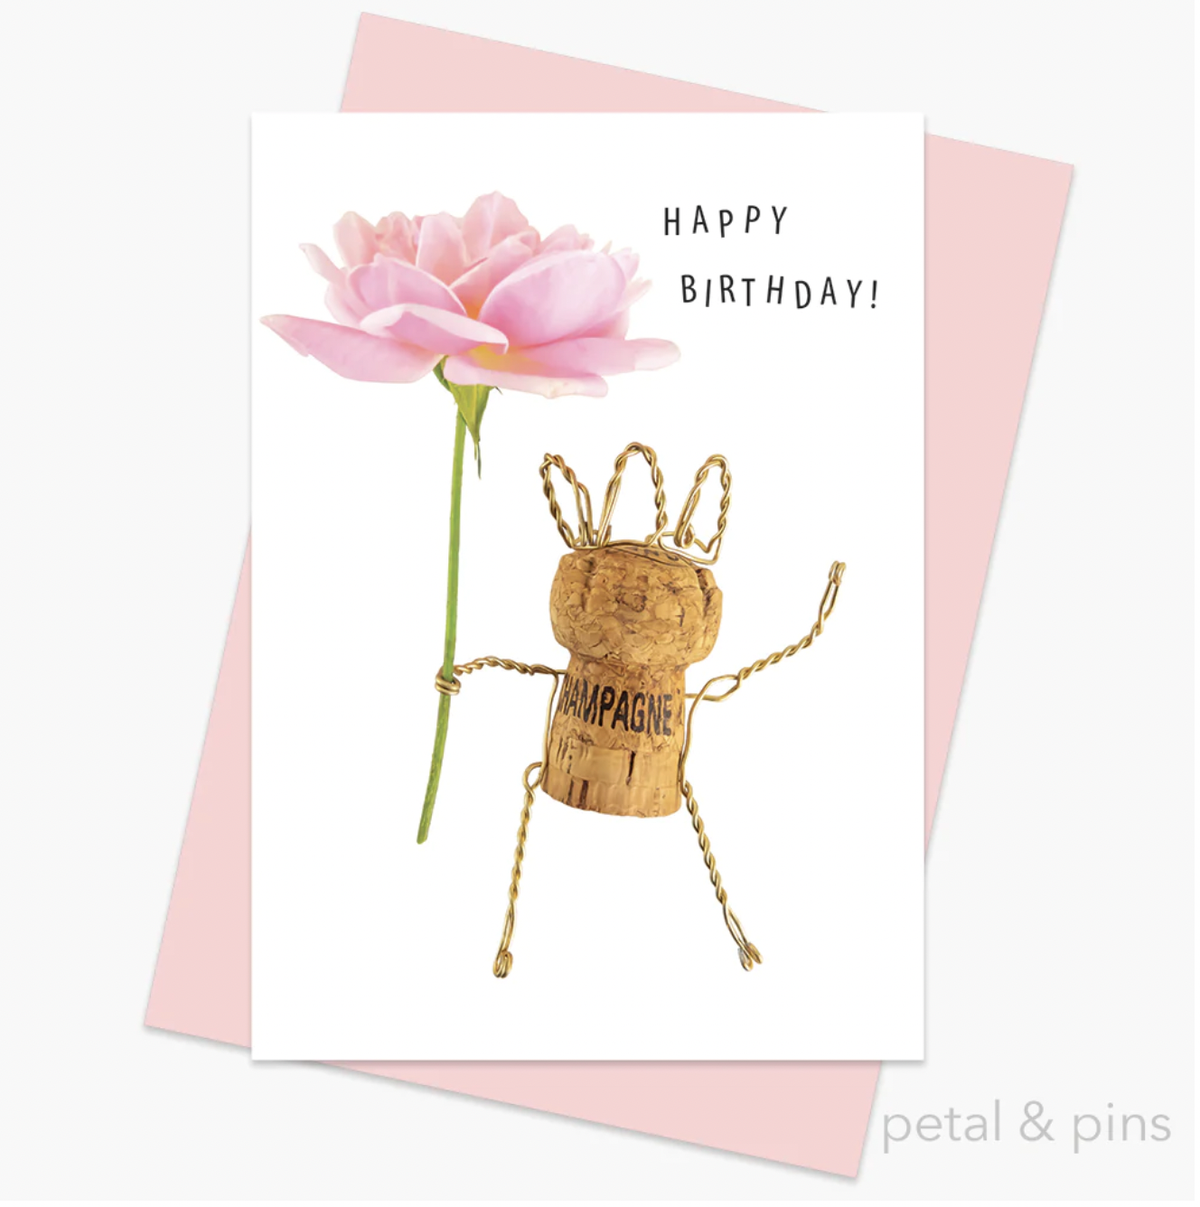 Happy Birthday  - Champagne - Greeting Card